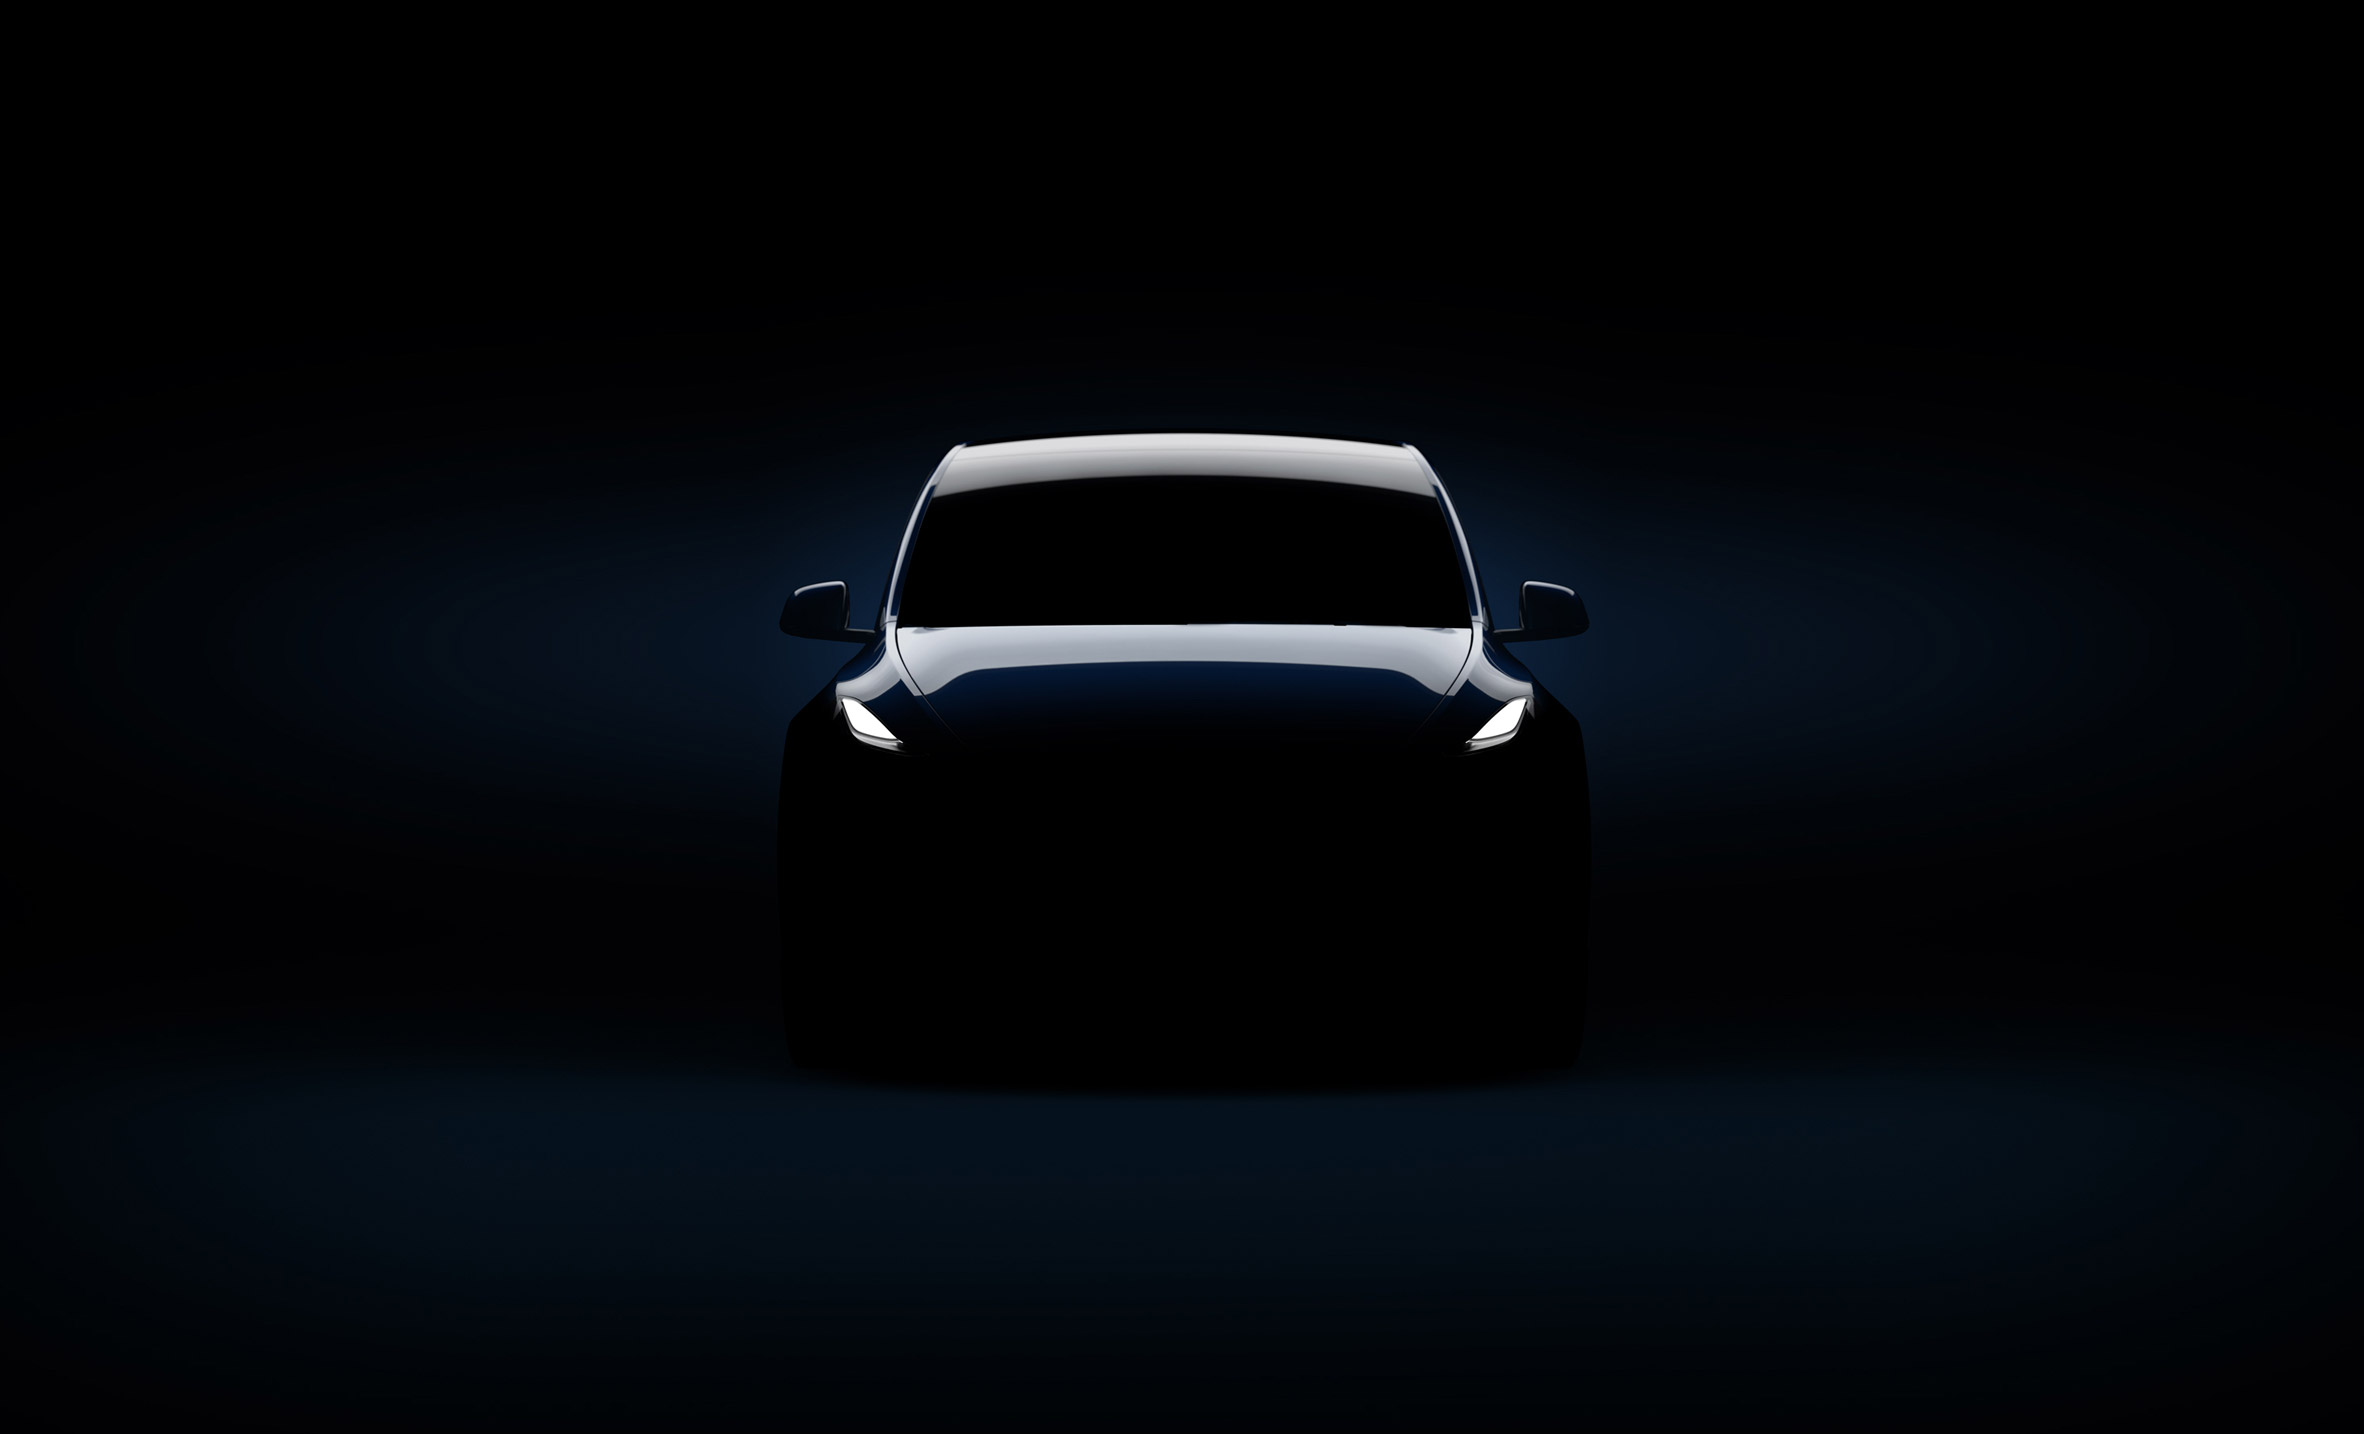 Tesla reveals latest Model Y electric SUV